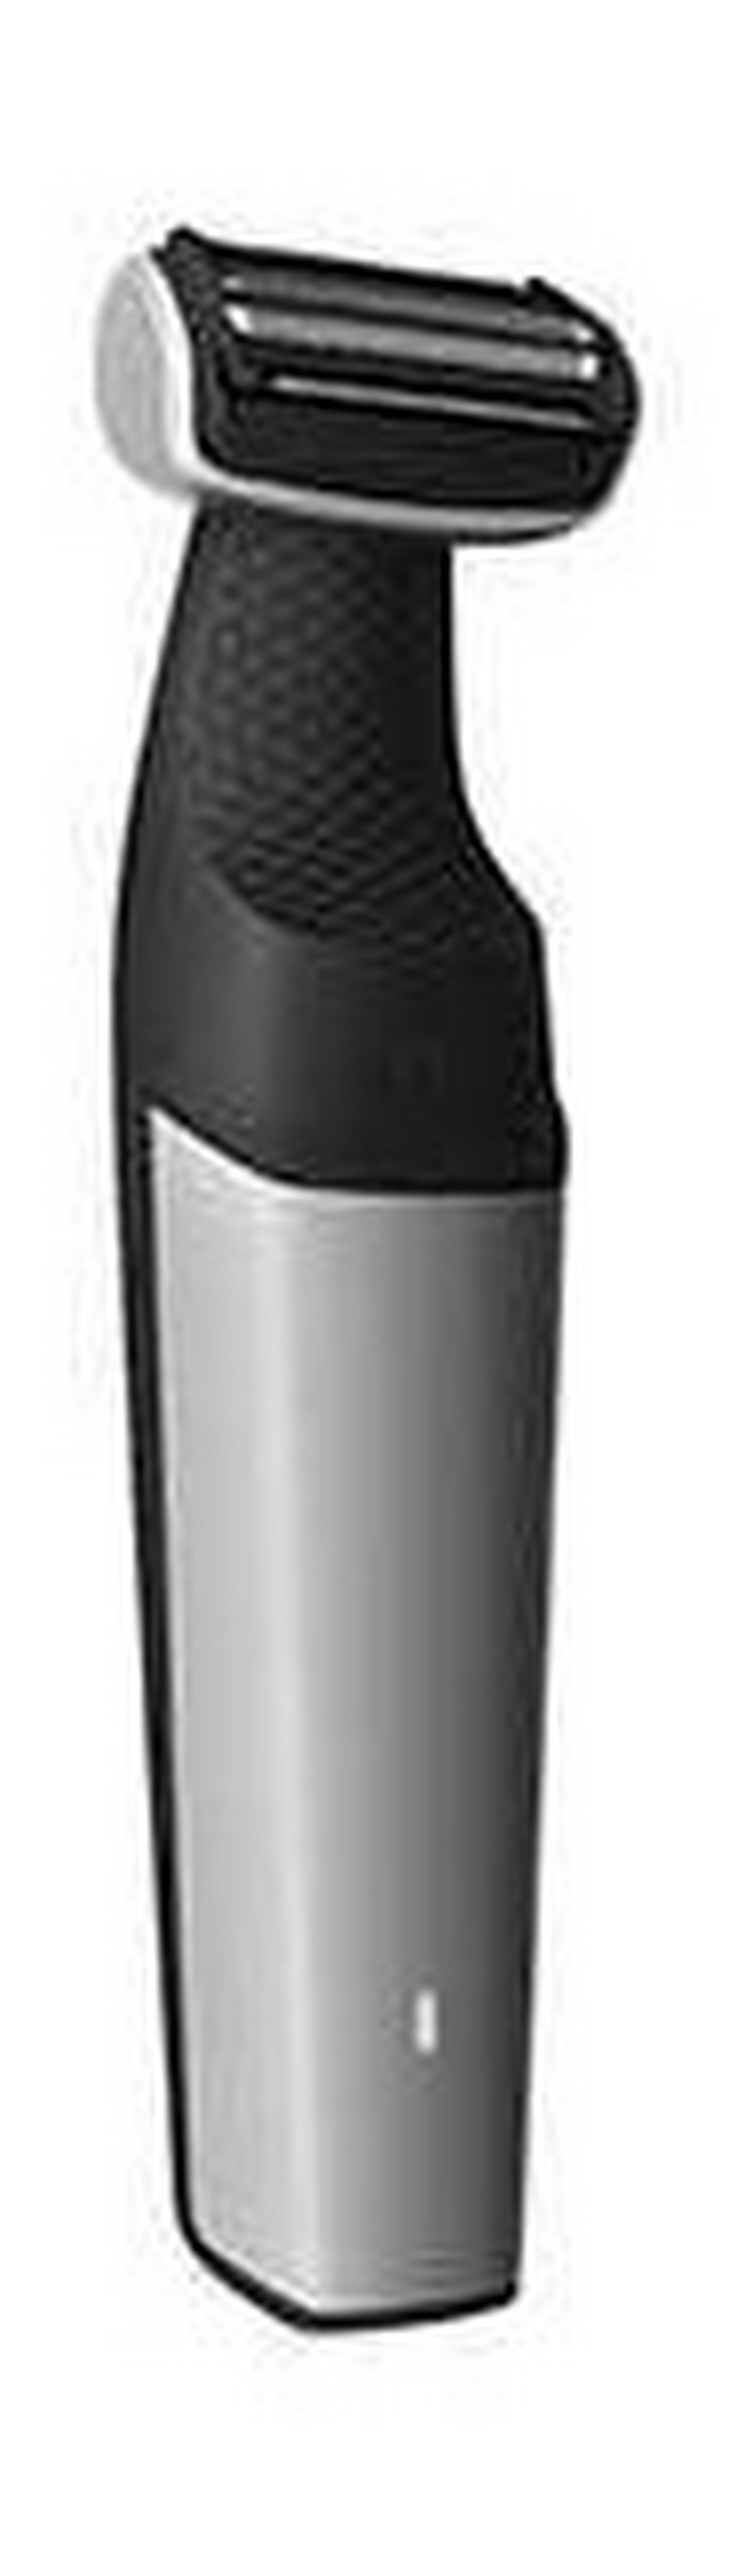 Philips Series 5000 Skin Comfort Showerproof Body Groomer, BG5020/13 - Silver/Black